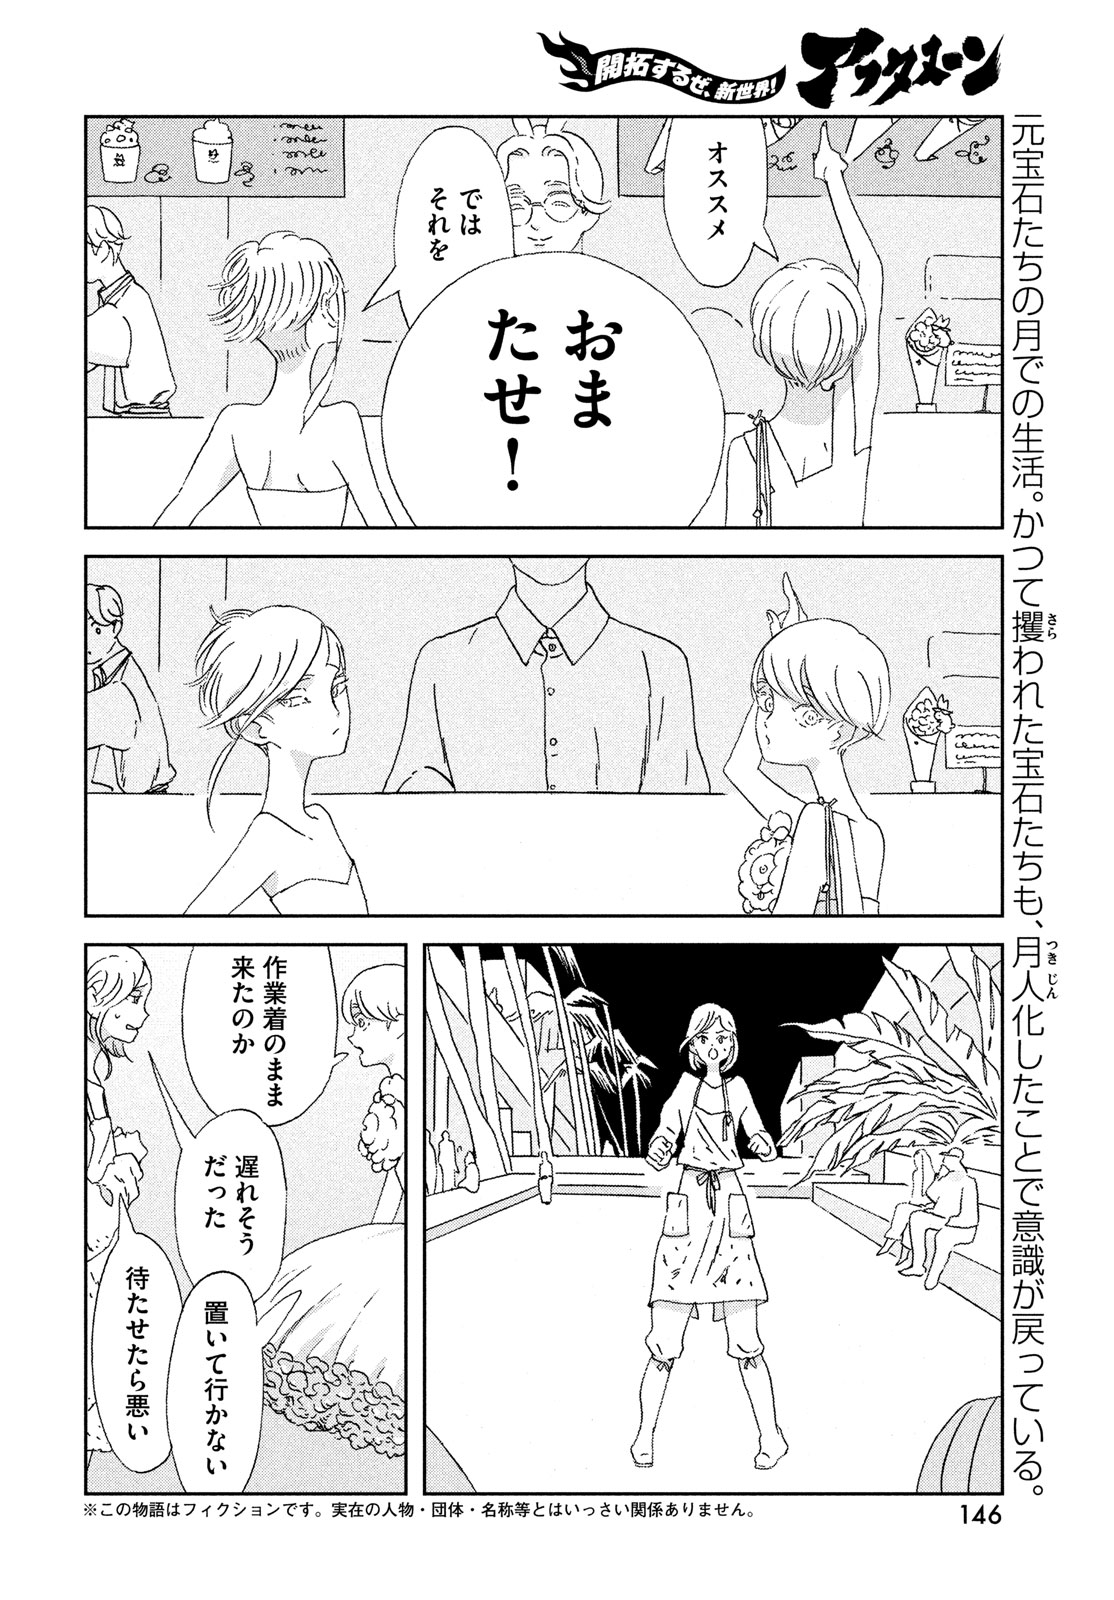 Houseki no Kuni - Chapter 96 - Page 2